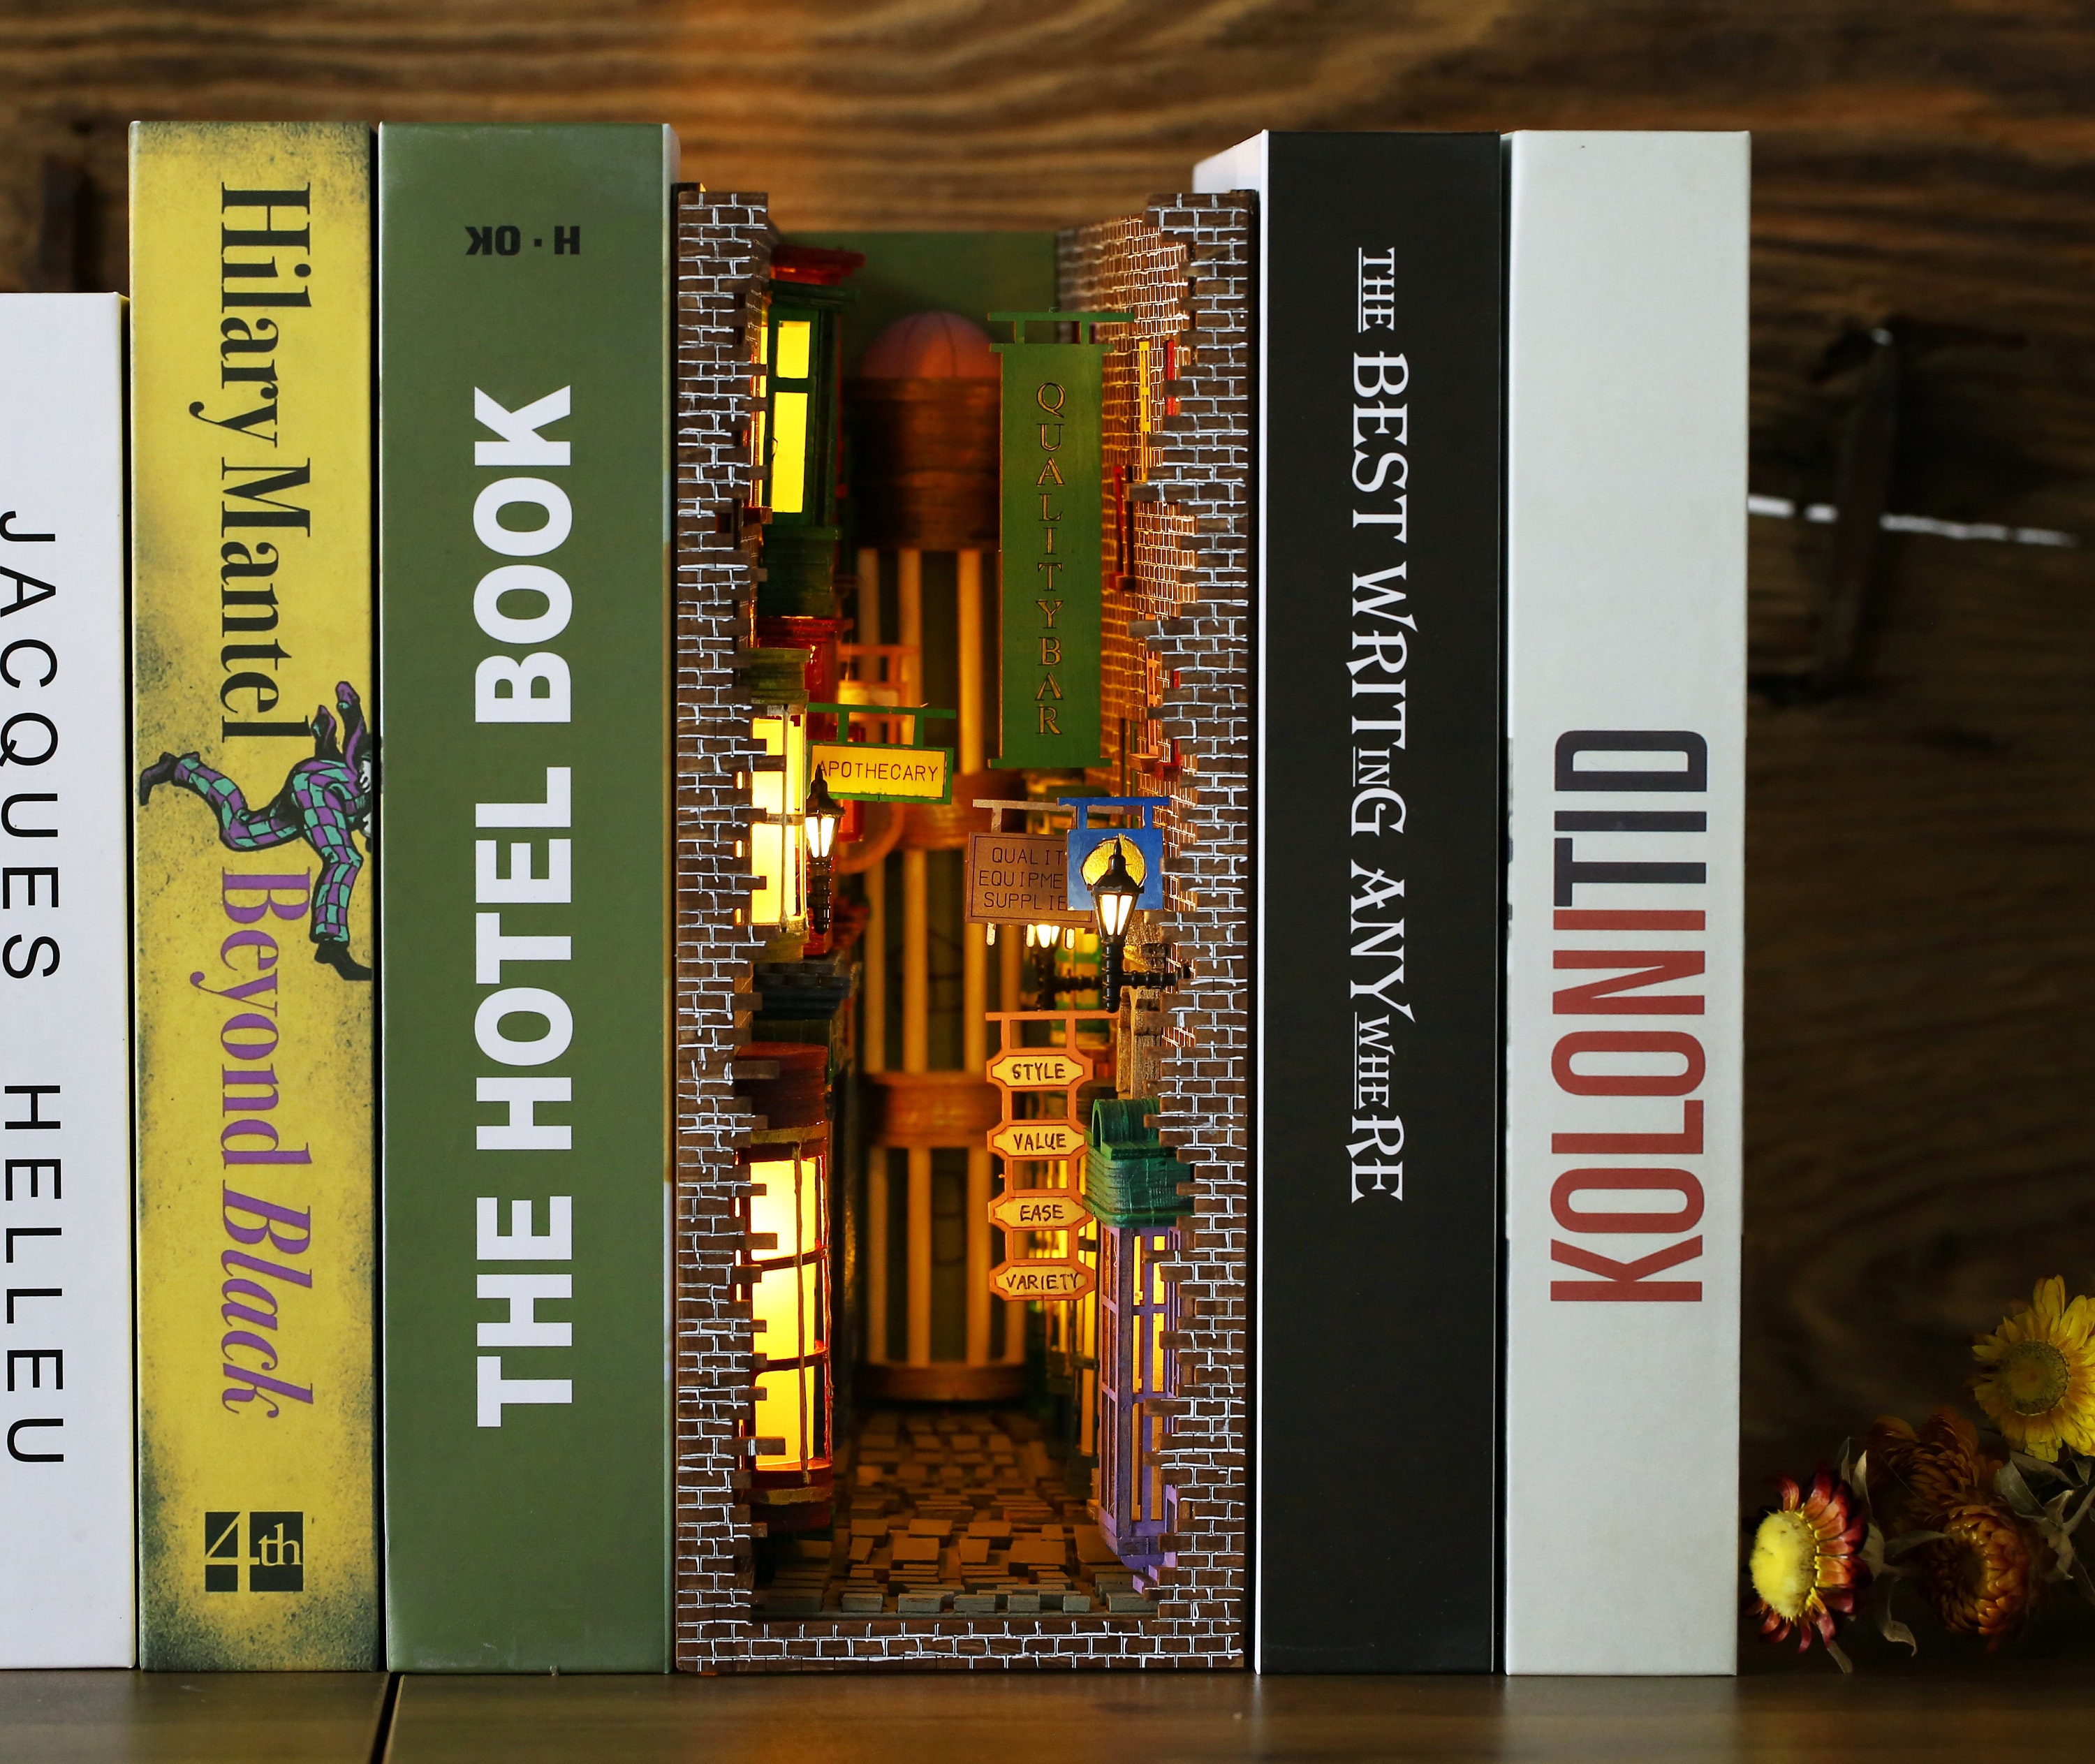 Diy Book Nook Kit Librairie Éternelle Miniature Dollhouse Book